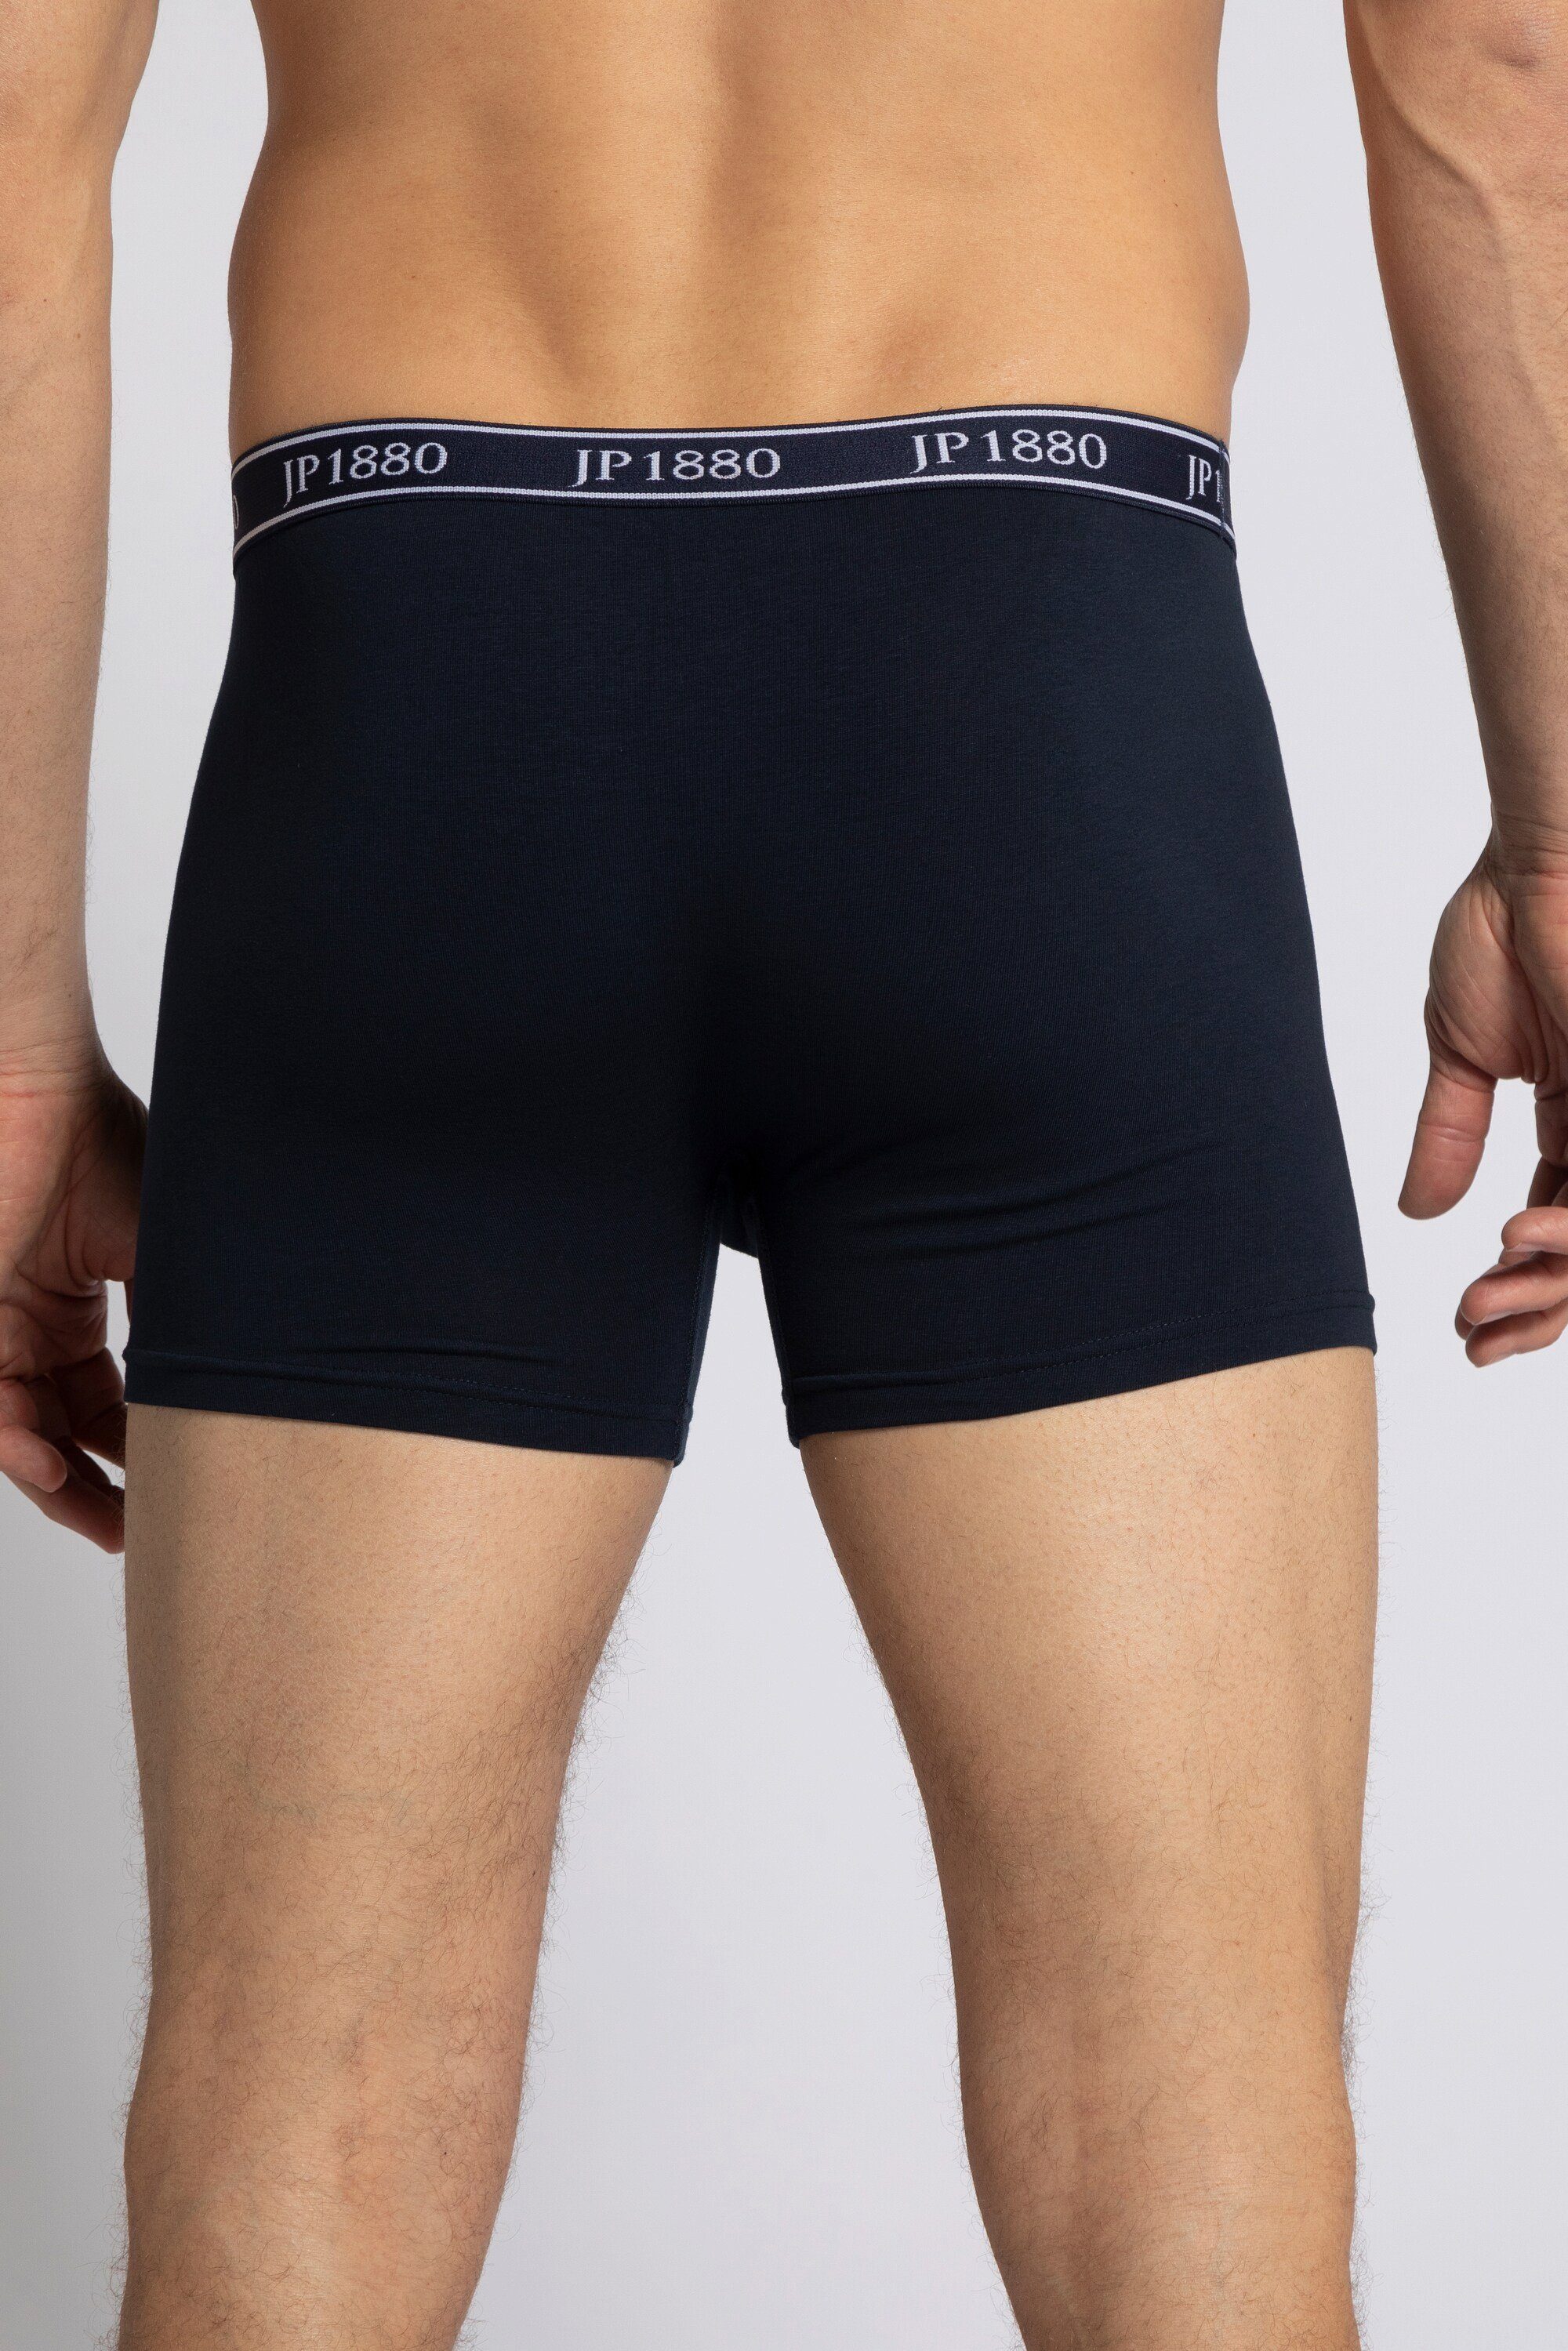 JP1880 Slip Pants Unterhose 2er-Pack (2-St) schwarz FLEXNAMIC® Jersey